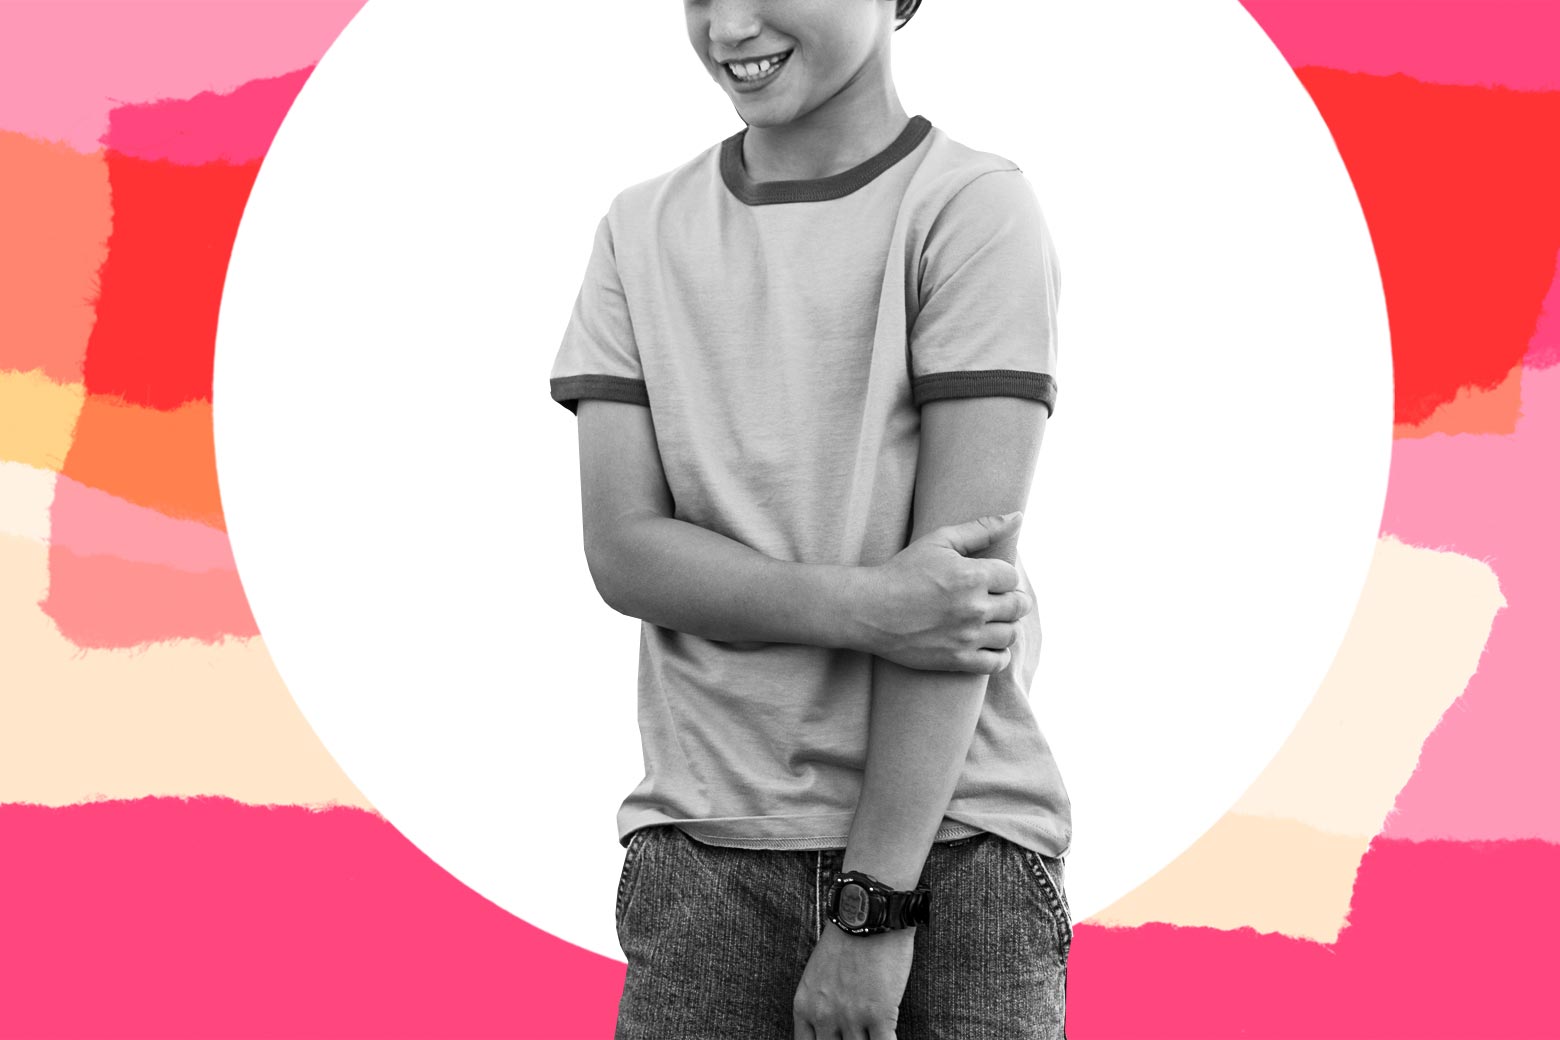 A teenage boy smiling sheepishly, alone.